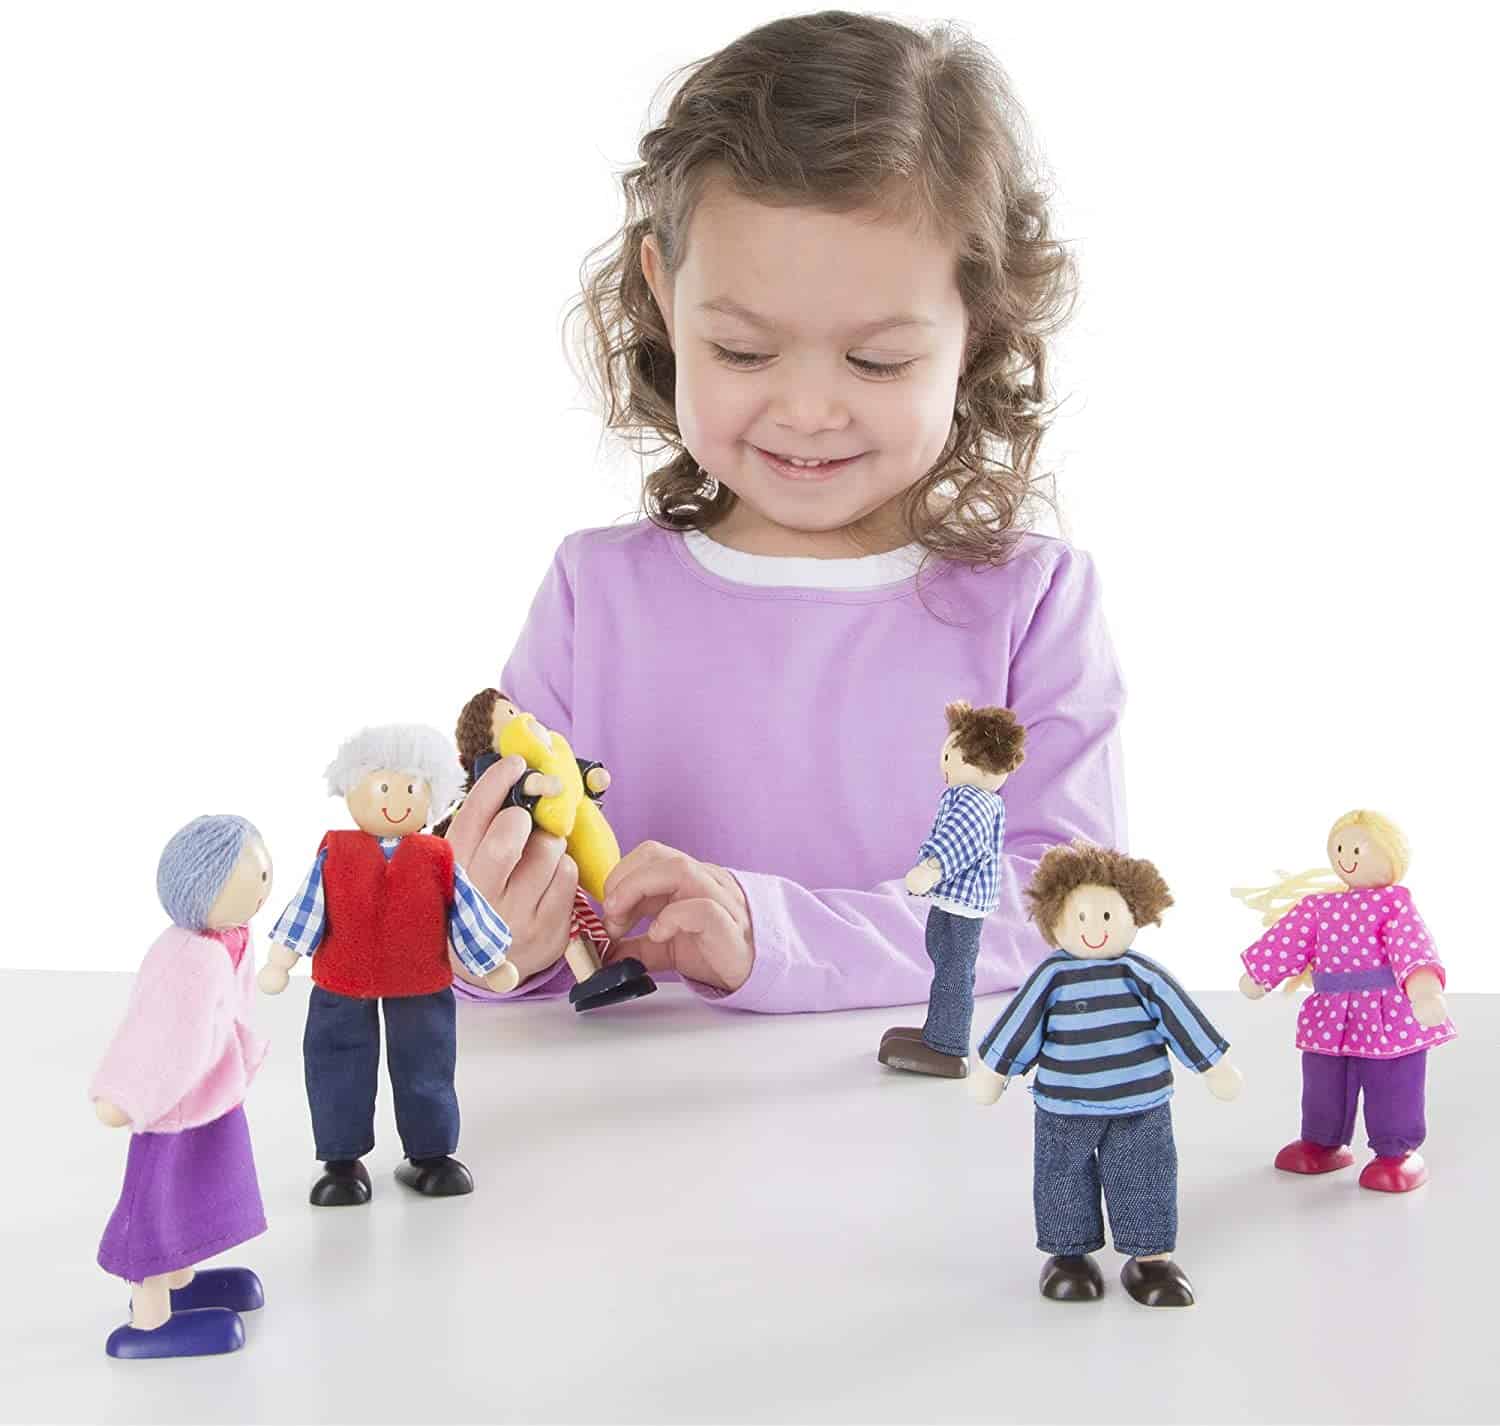 Las mejores muñecas de casa de muñecas: familia de casas de muñecas Melissa & Doug